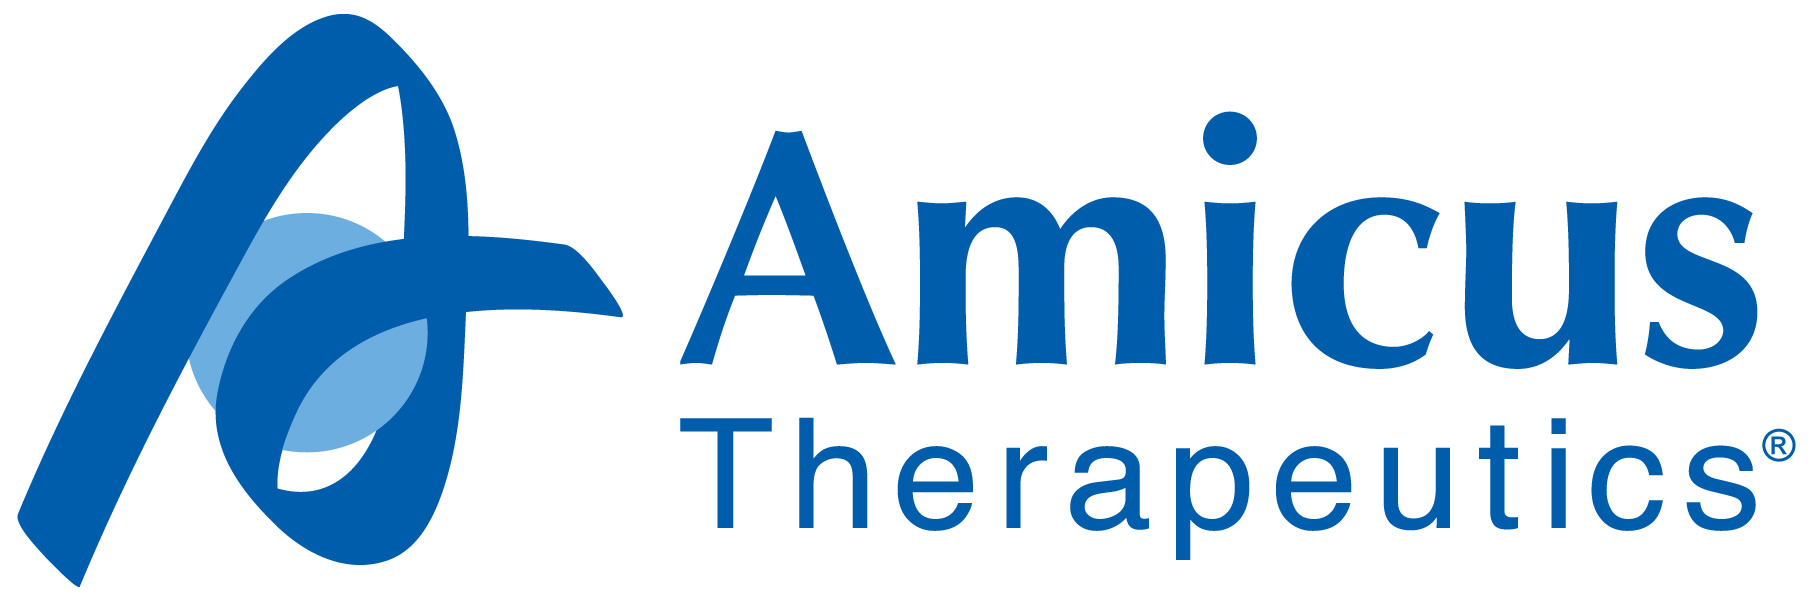 Amicus-logo.jpg